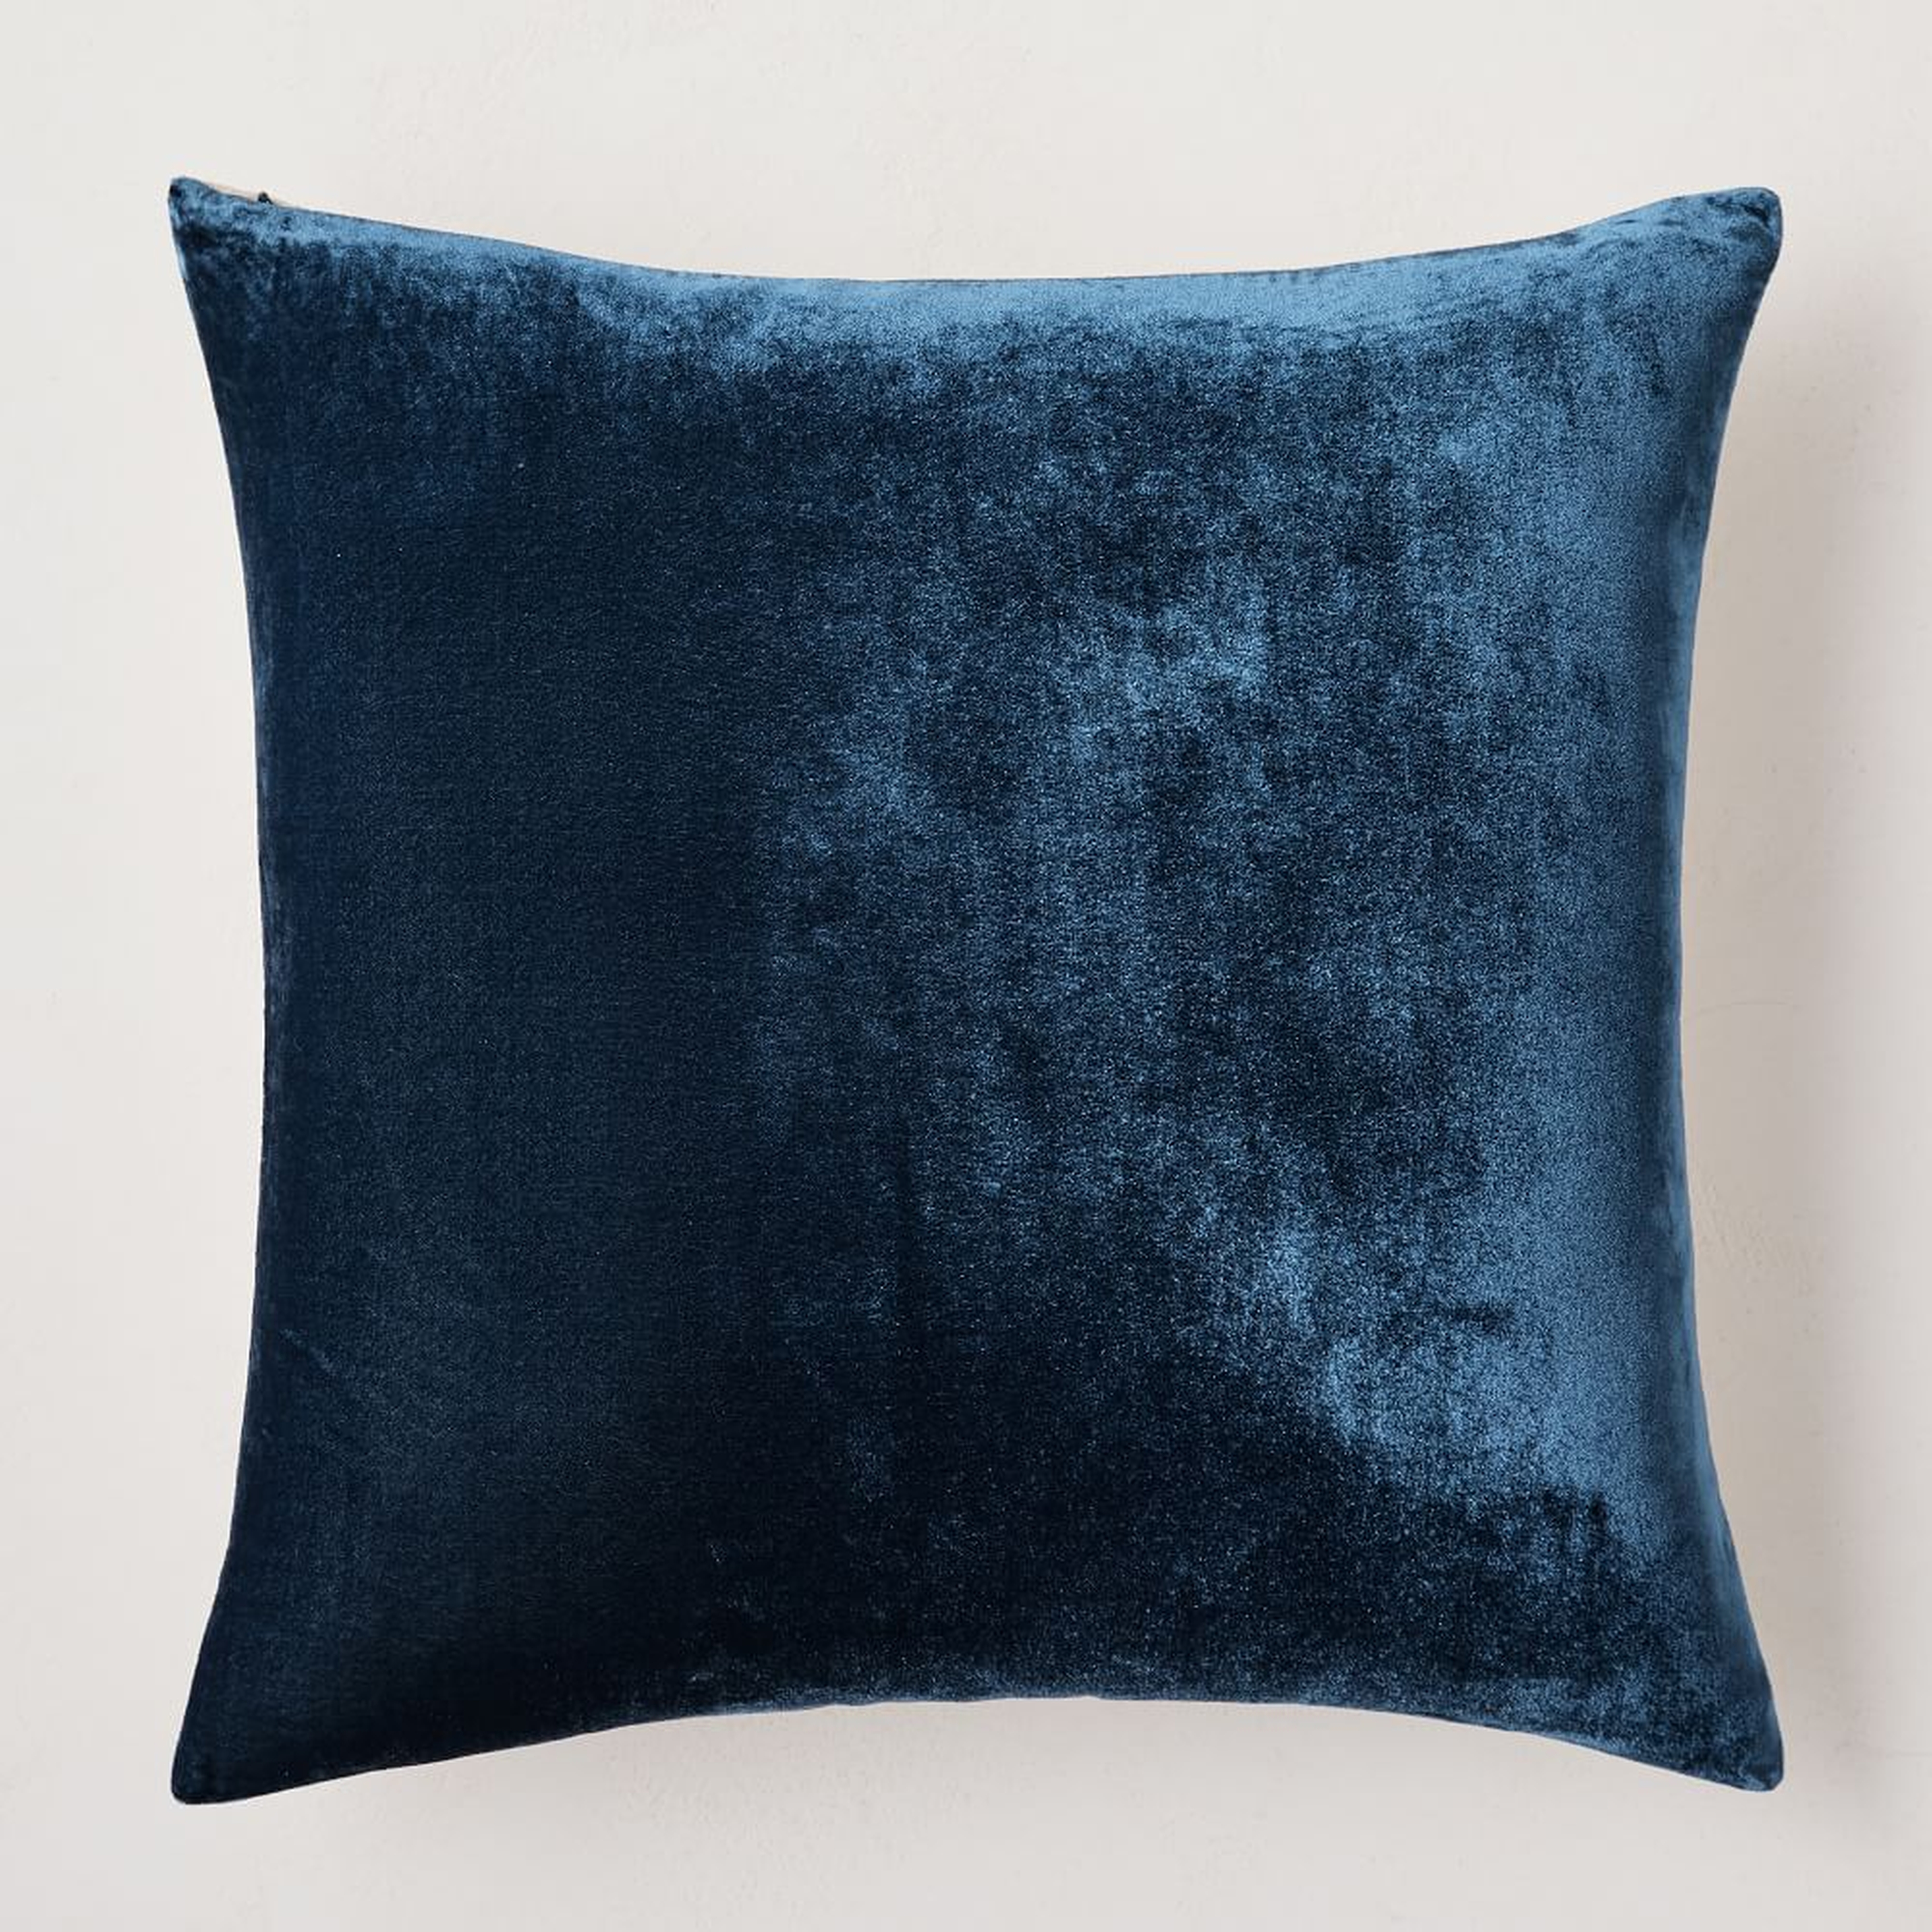 Lush Velvet Pillow Cover, 20"x20", Regal Blue, Set of 2 - West Elm